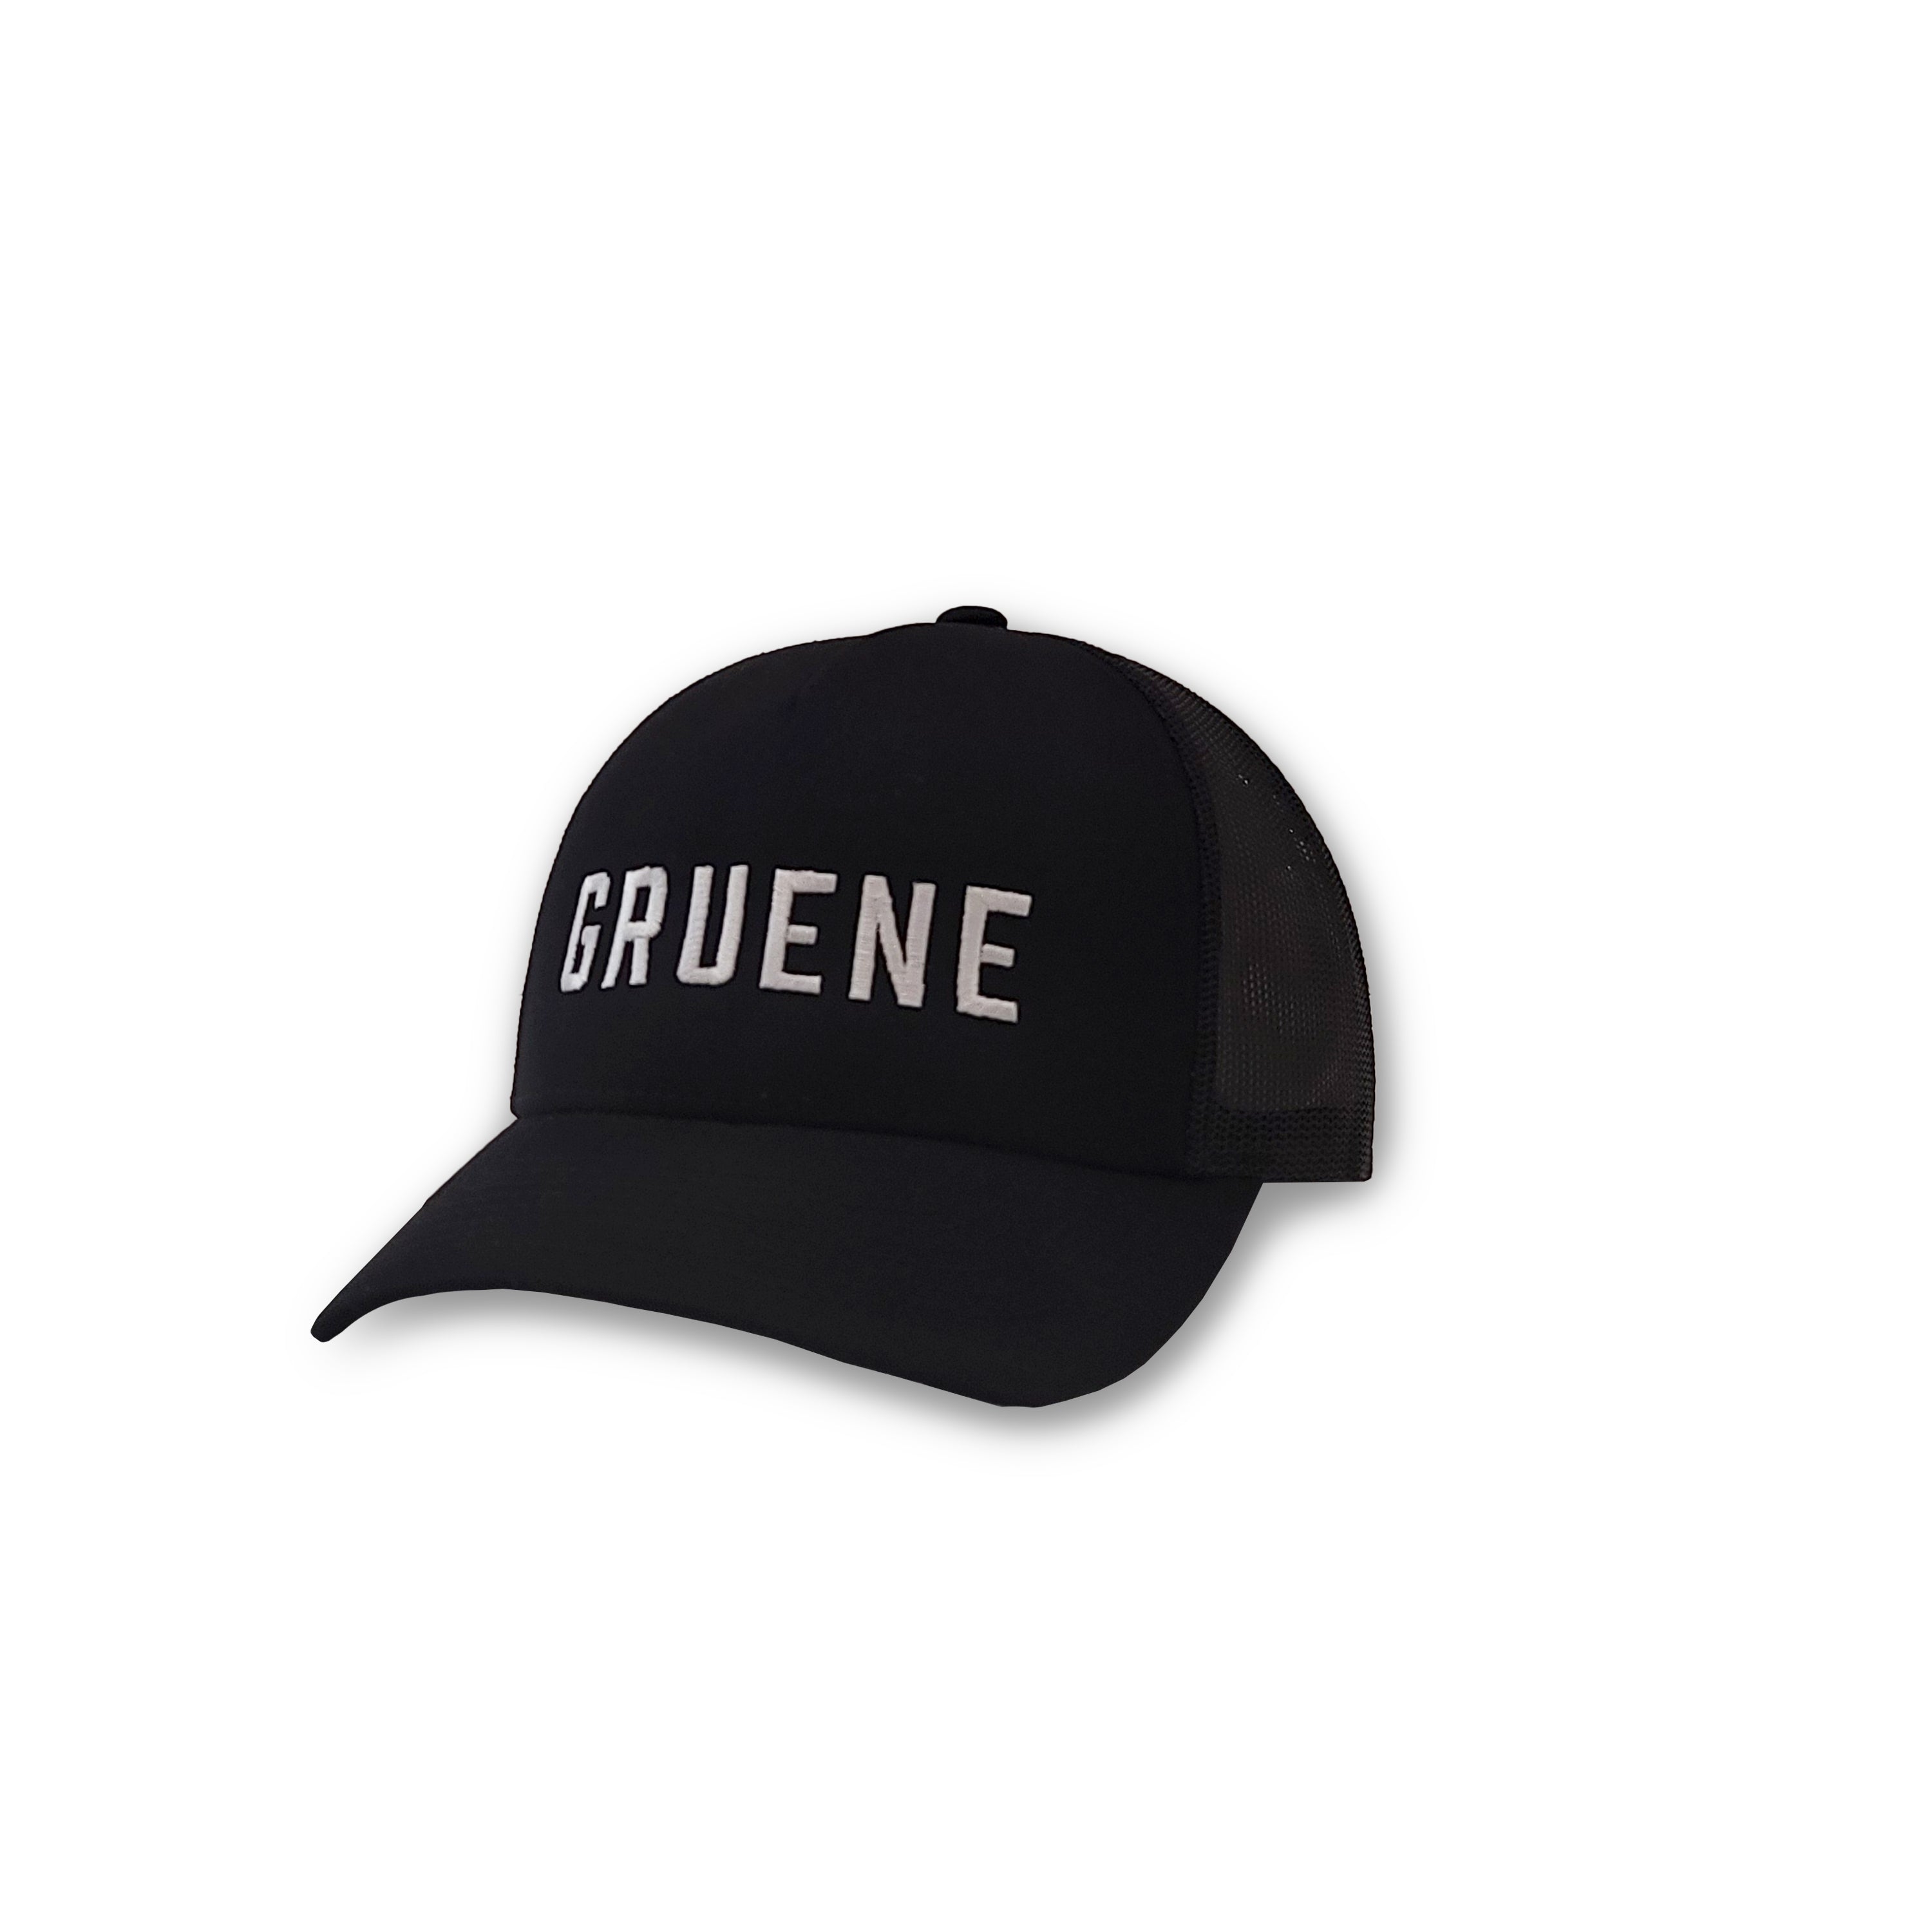 Varsity Gruene hat